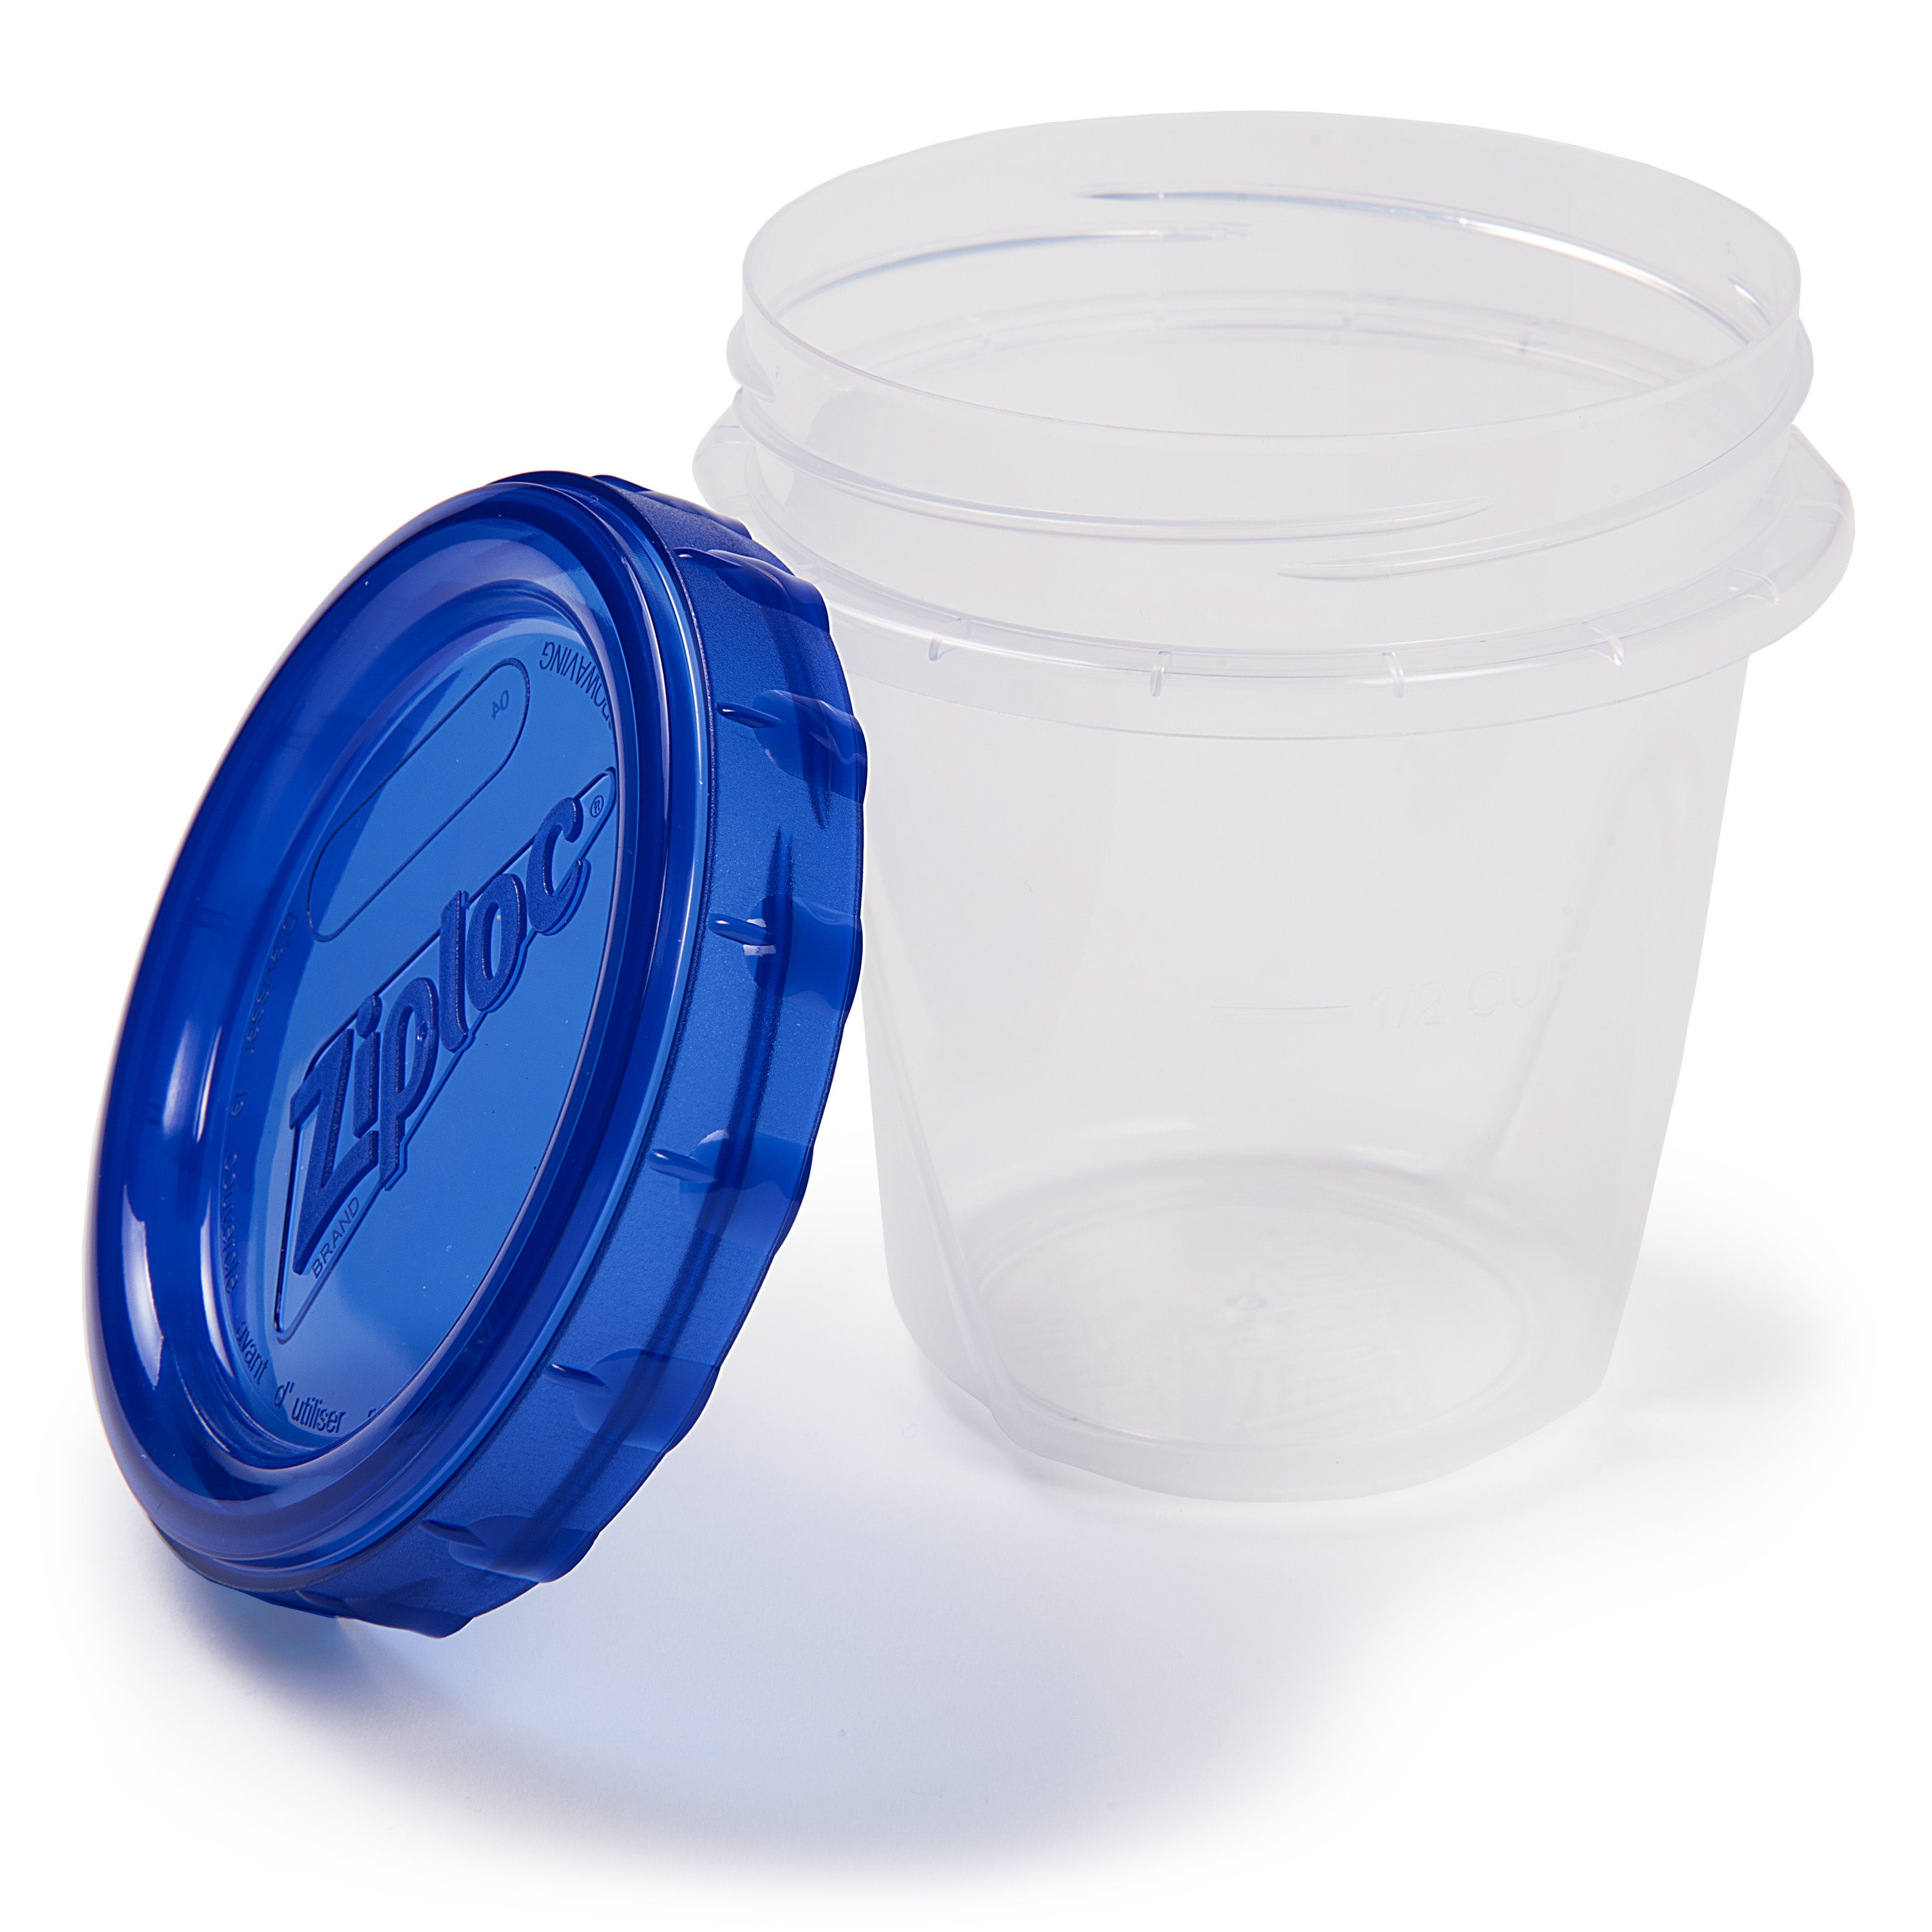 Ziploc Twist 'n Loc Round Storage Pint Containers & Lids - Clear/Blue, 3 ct  - Harris Teeter